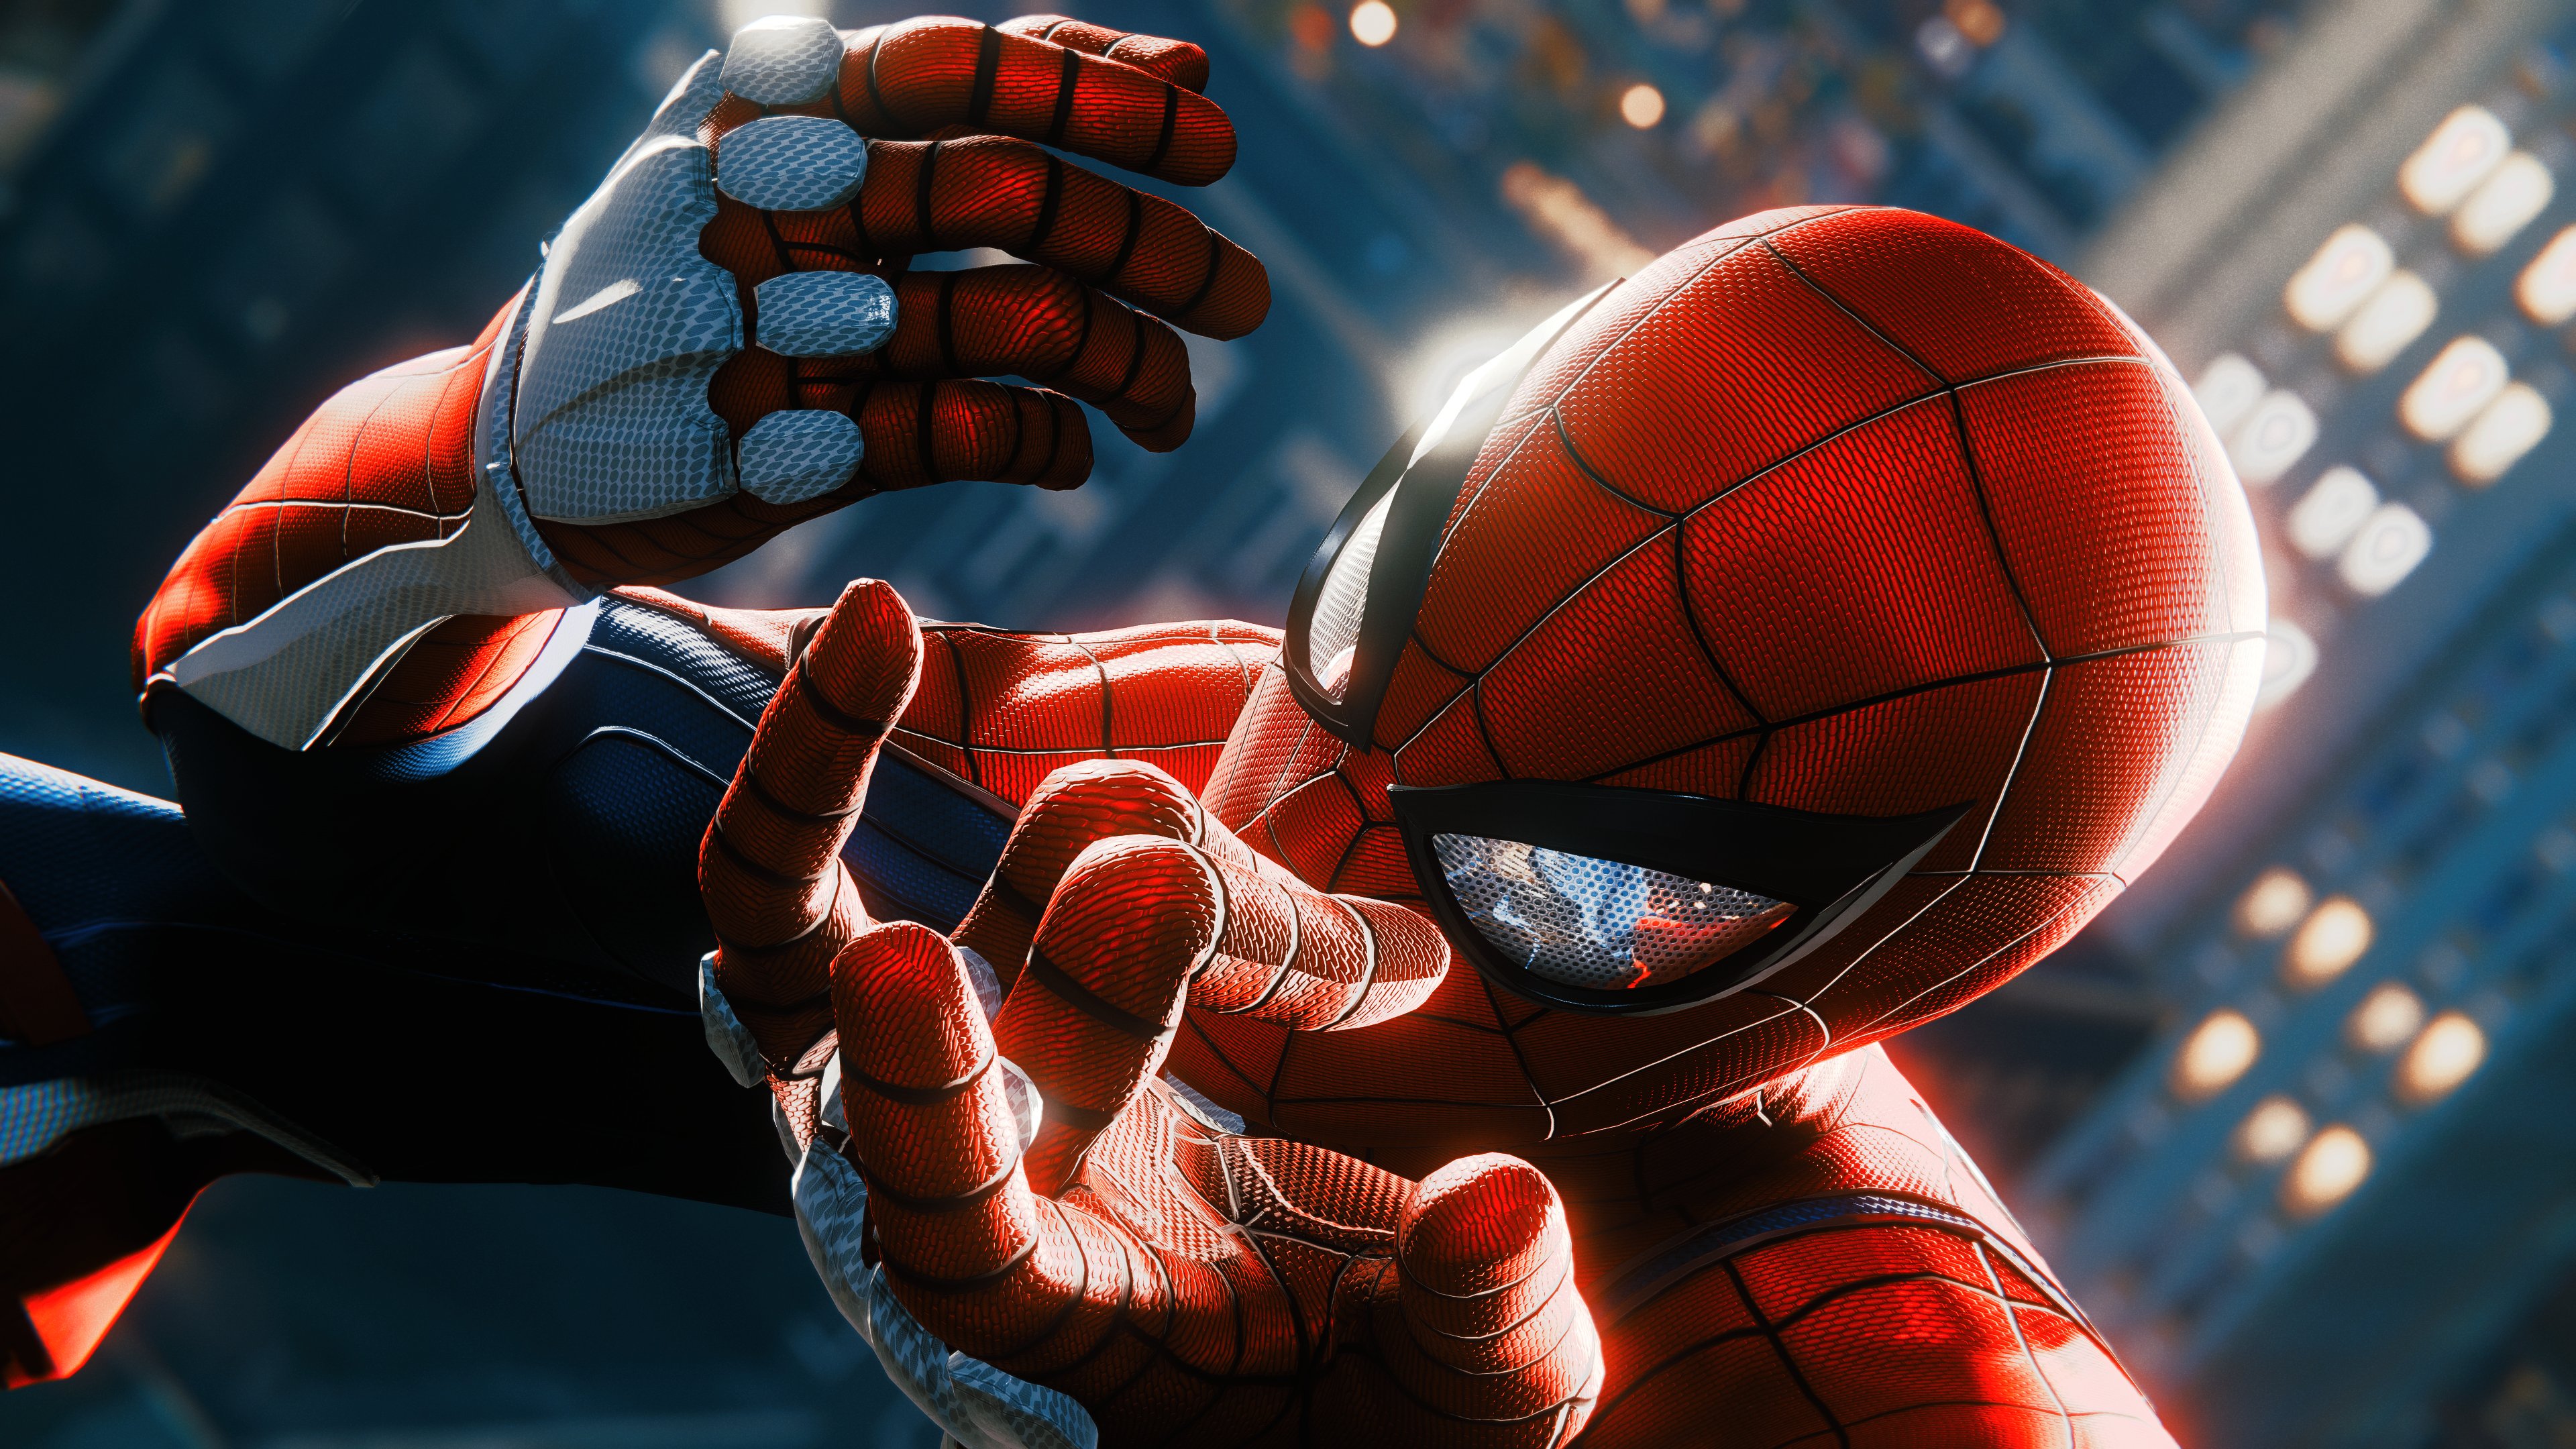 Marvel's Spider-Man Remastered Wallpaper 4K, Photo mode, Spiderman